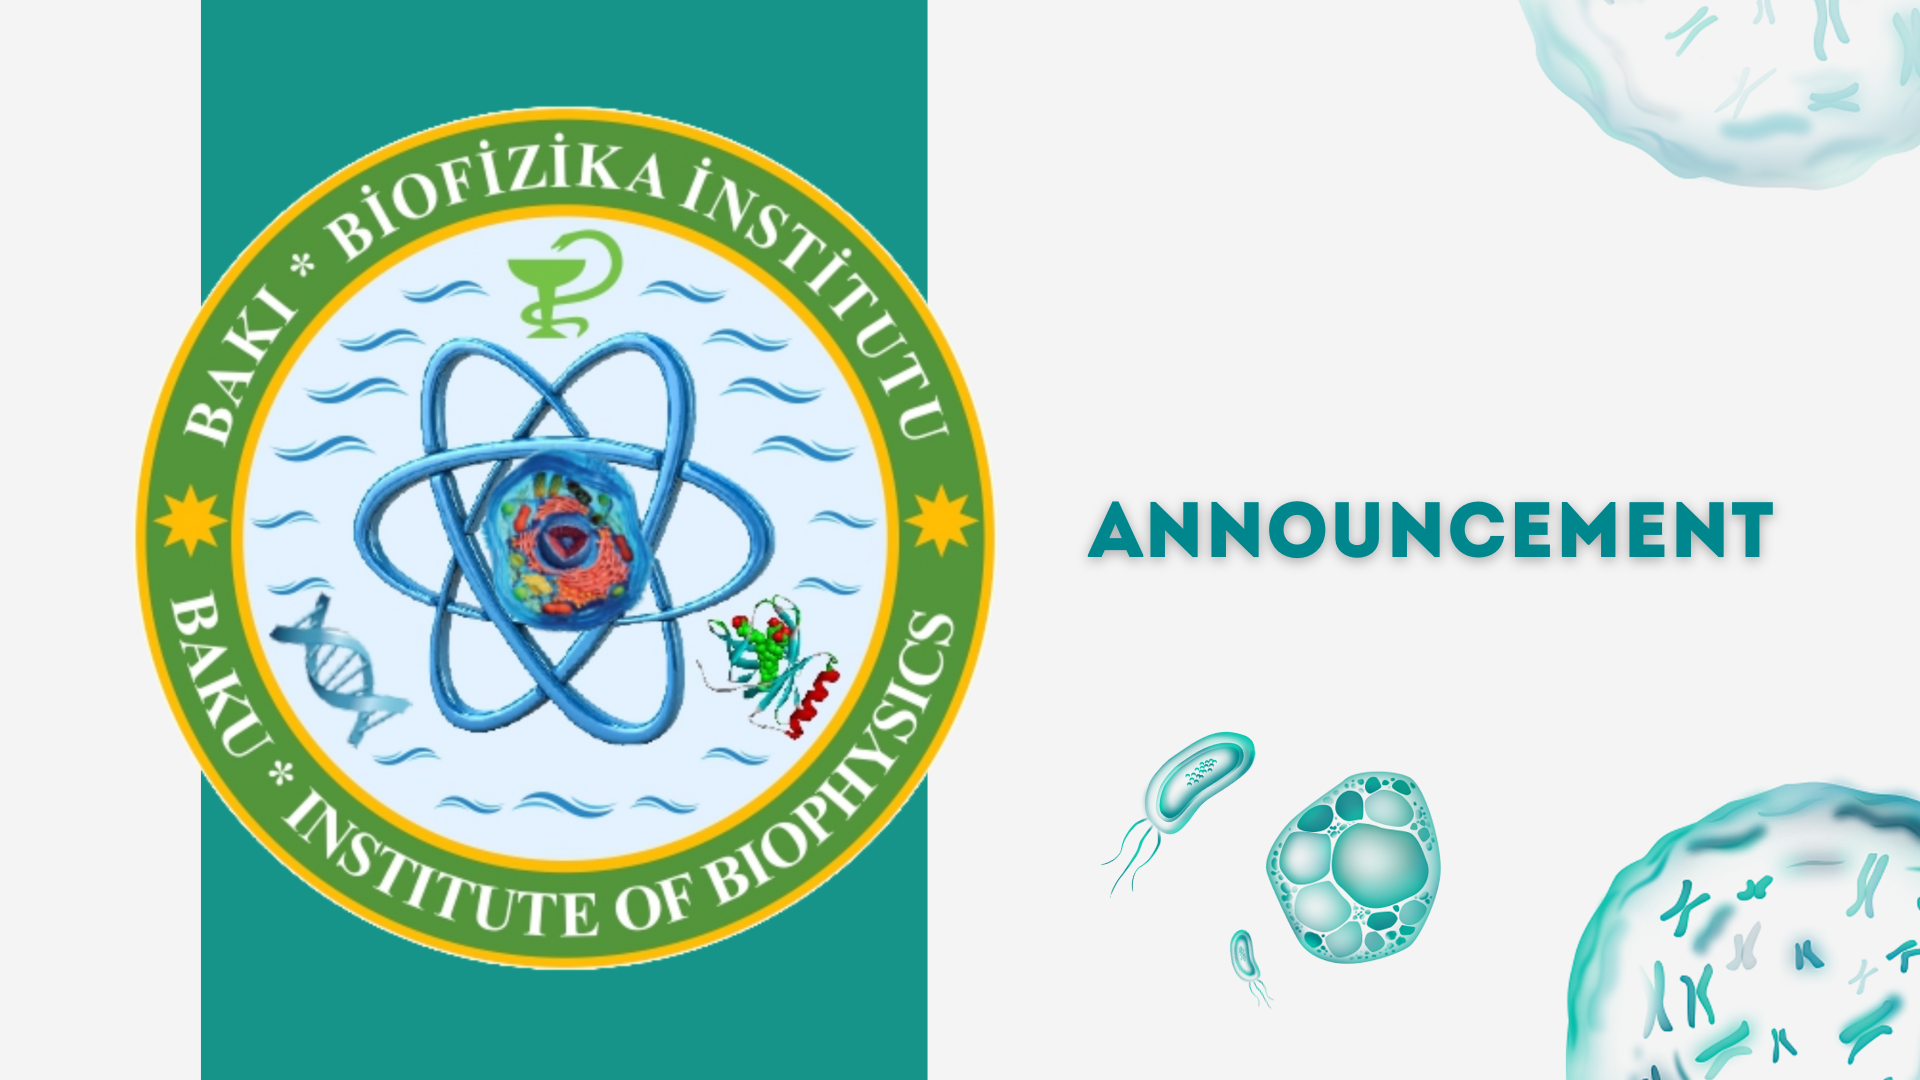 The Institute of Biophysics announces a vacancy